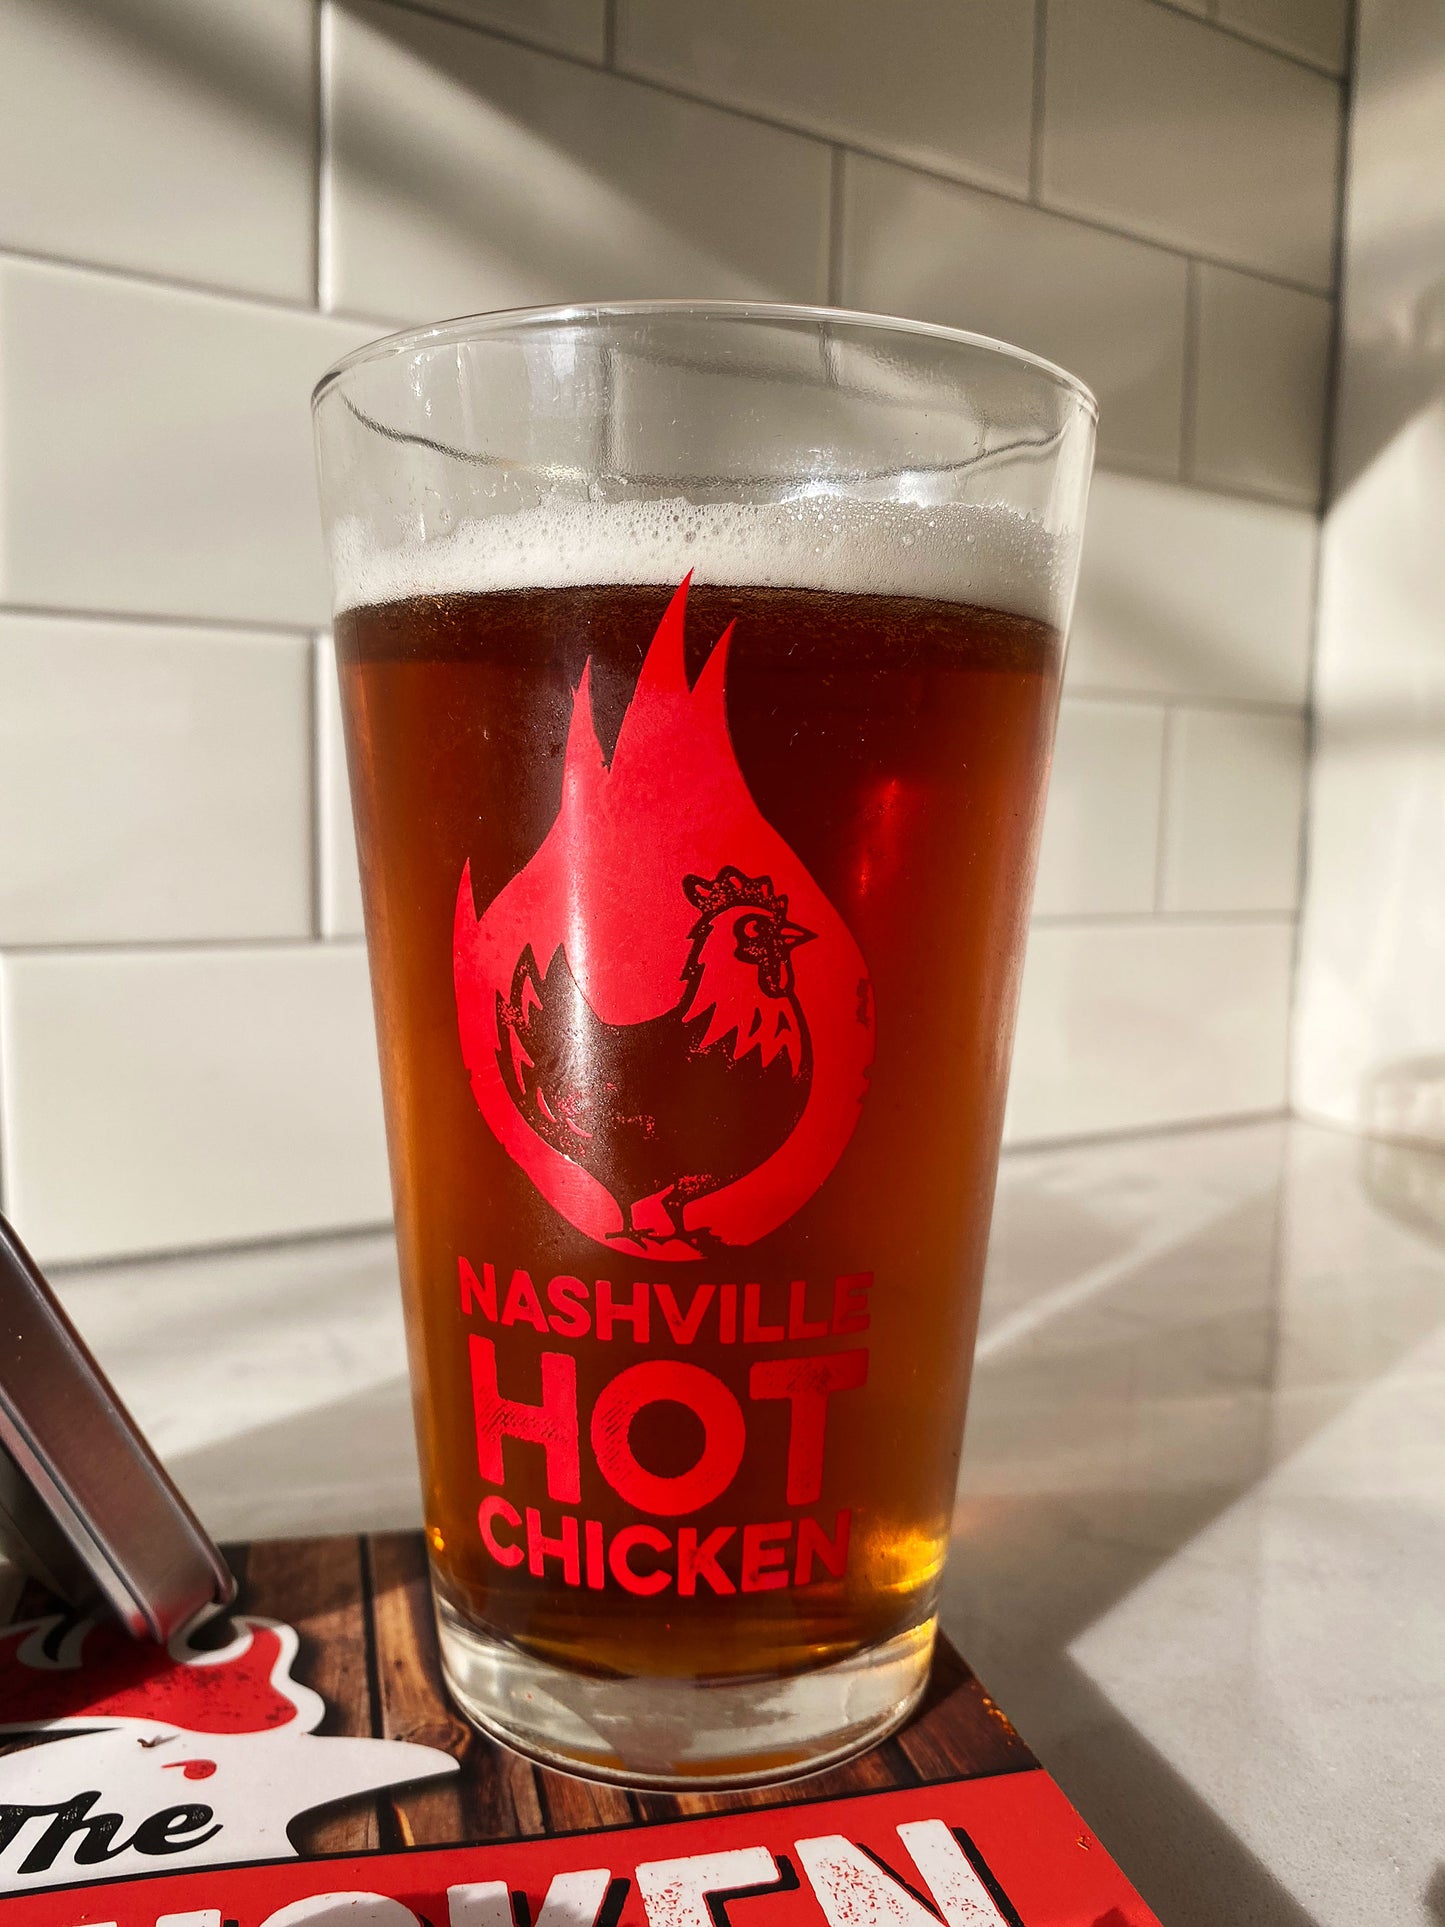 Batch "Hot Chicken" Glass